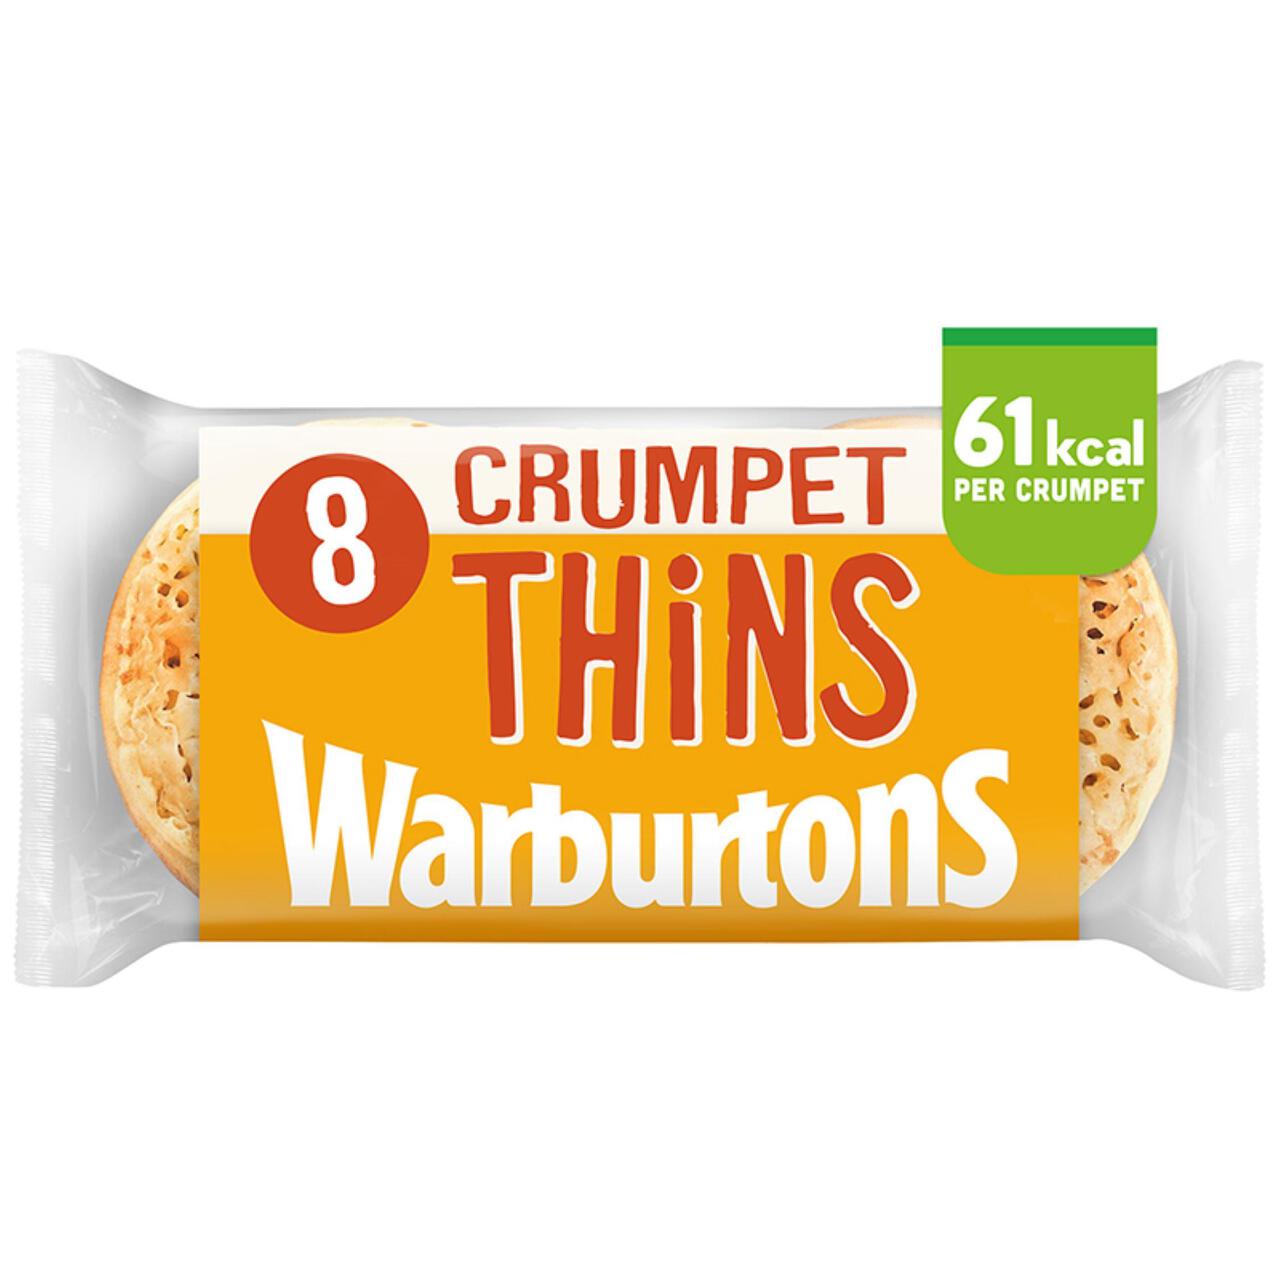 Warburtons 8 Crumpet Thins 8 per pack